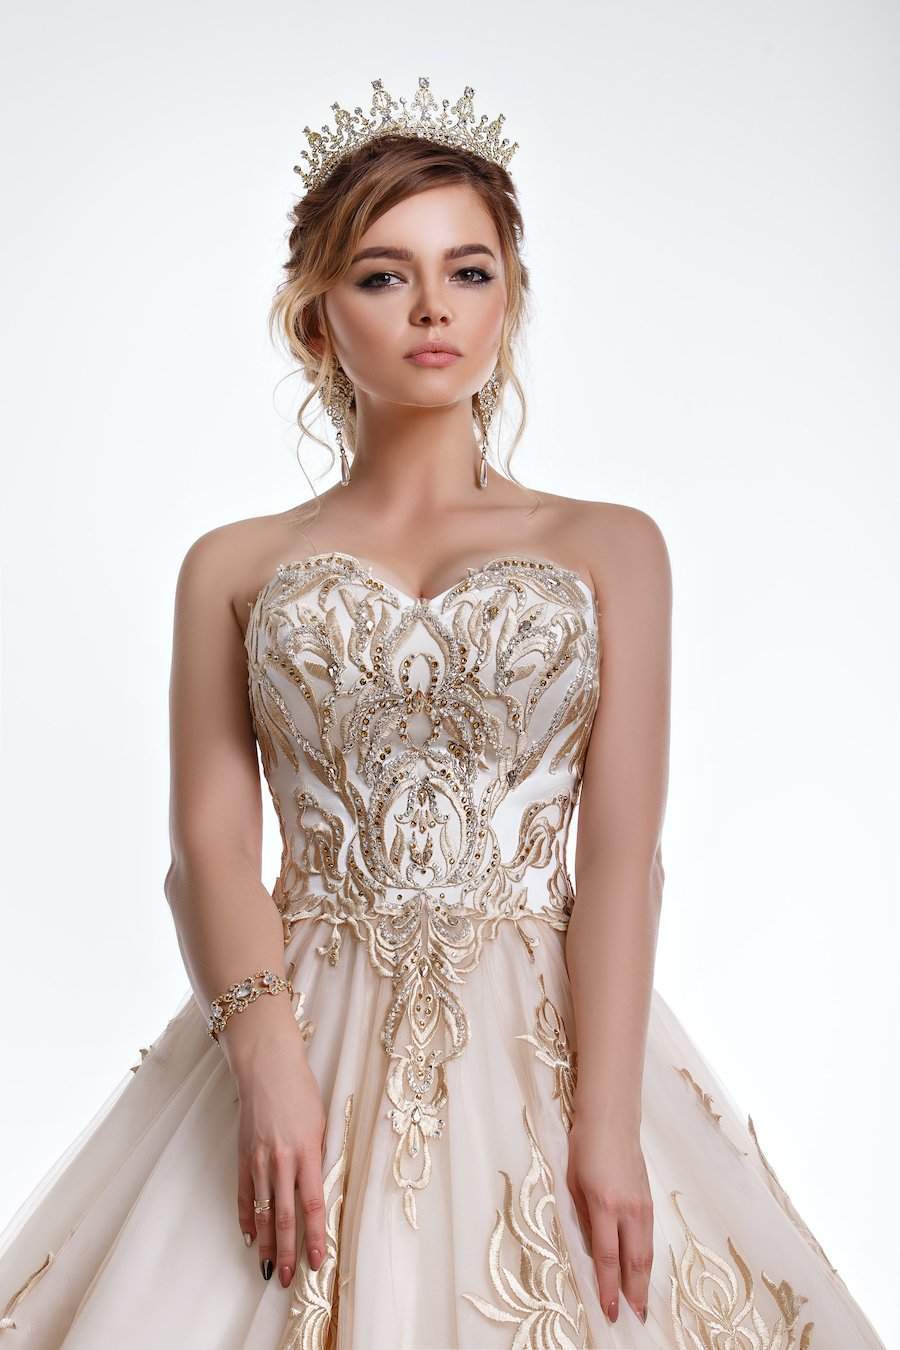 Beige A-Line Wedding Dress-A-line,Ball Gown,Classic Elegant Gowns,Gold,Royal Wedding Dresses